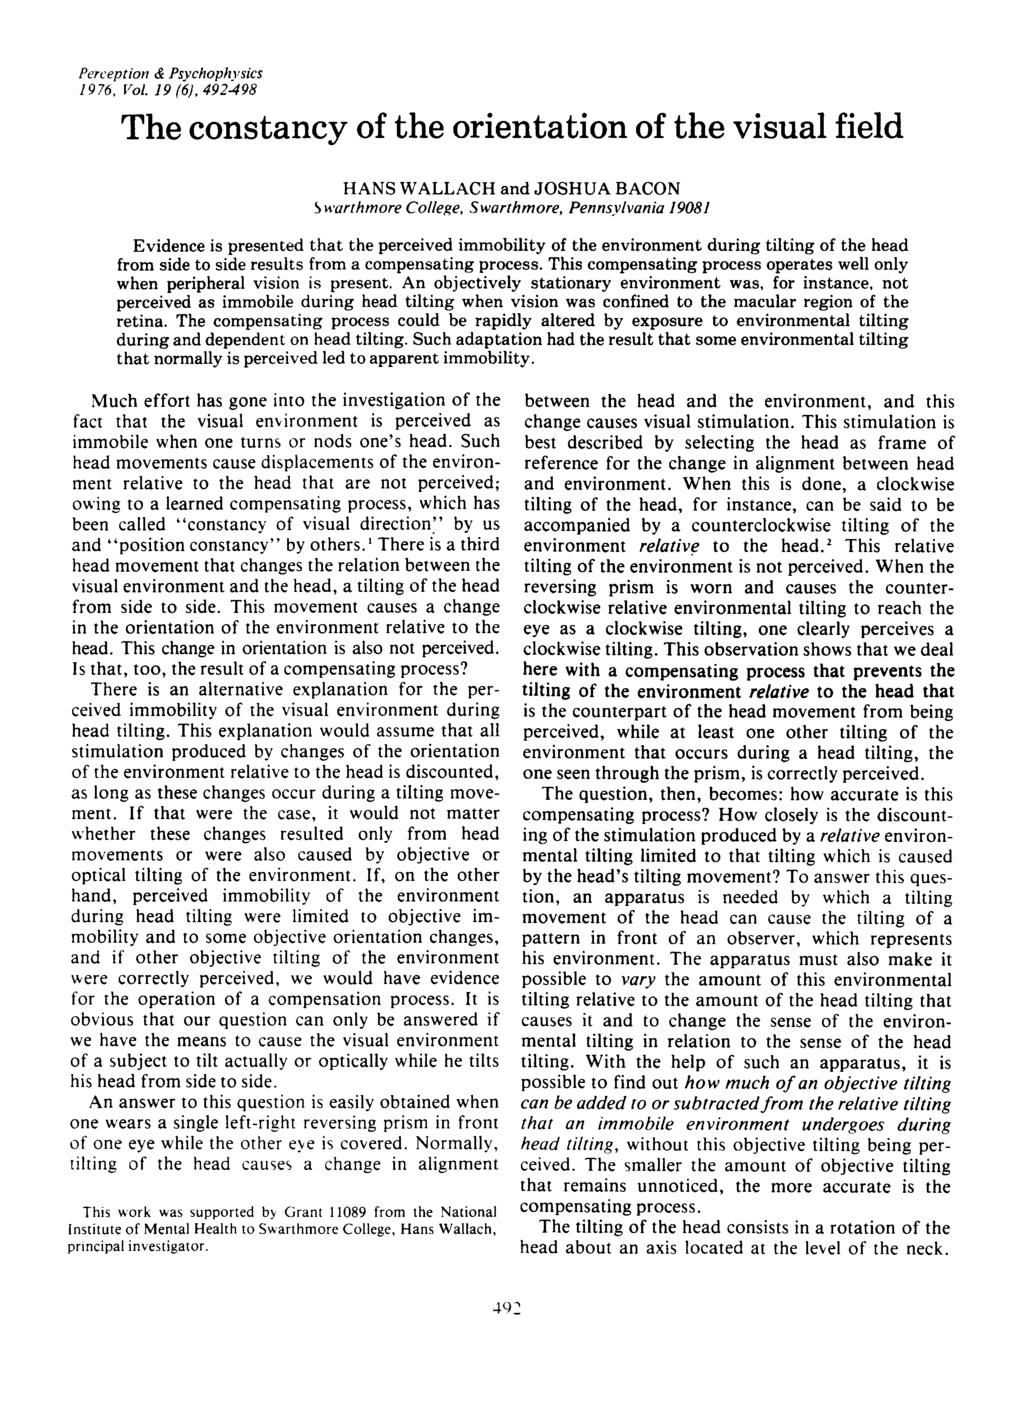 Perception & Psychophysics 1976, Vol. 19 (6).